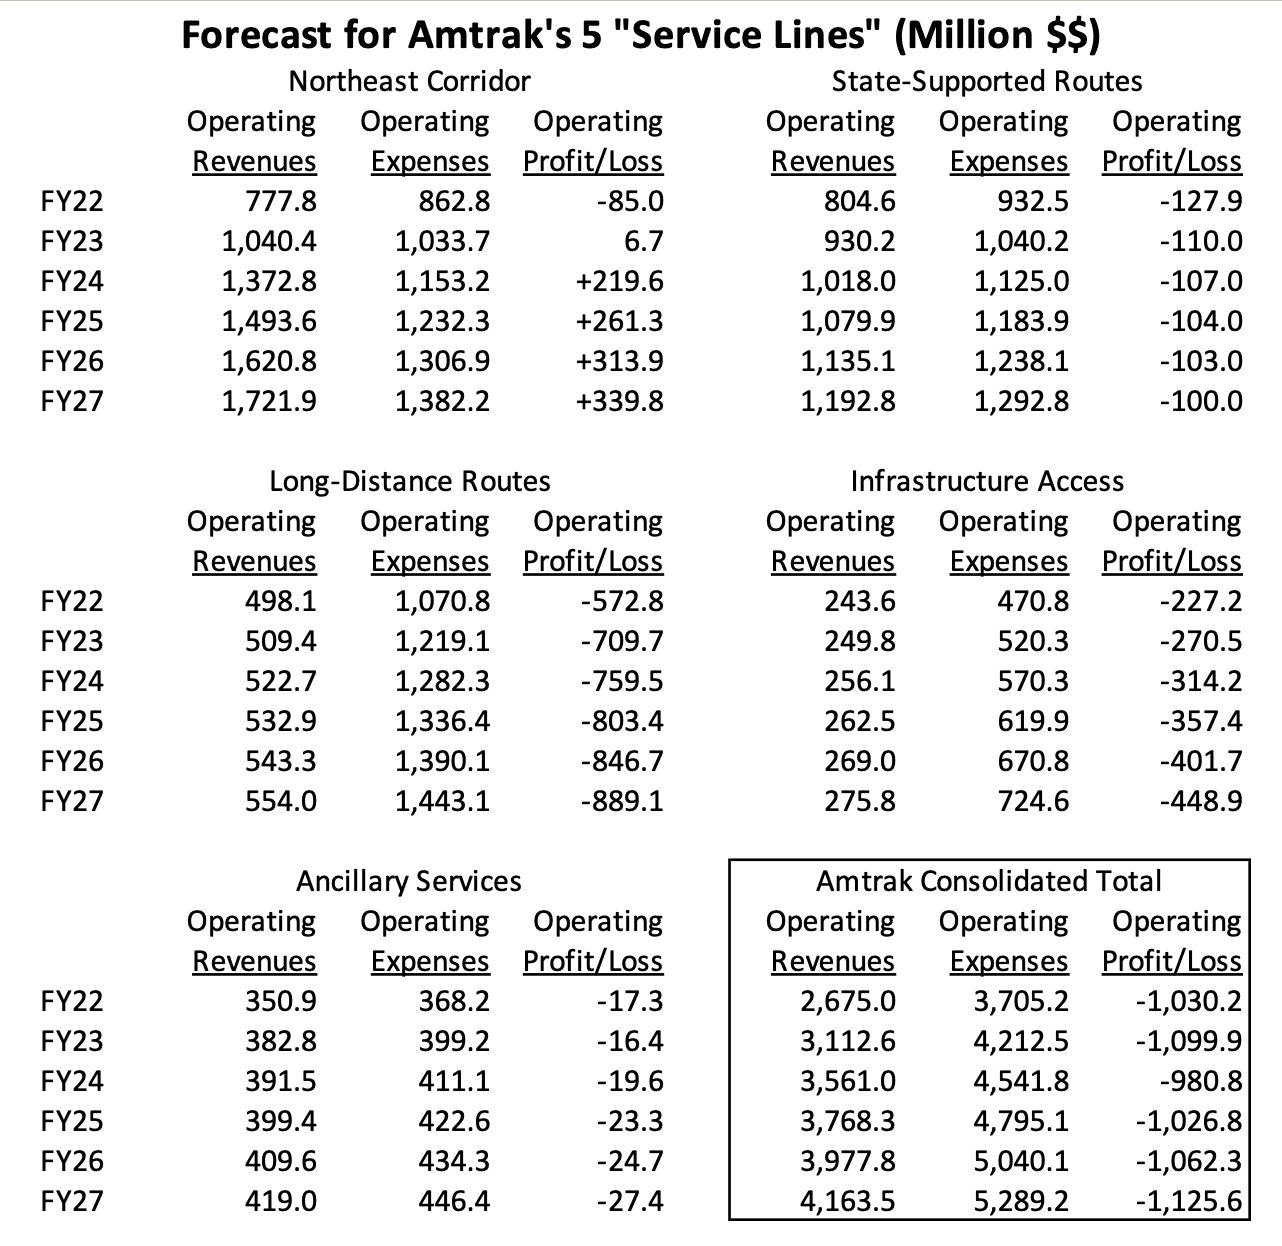 Amtrak-service-lines-FY22-27.png